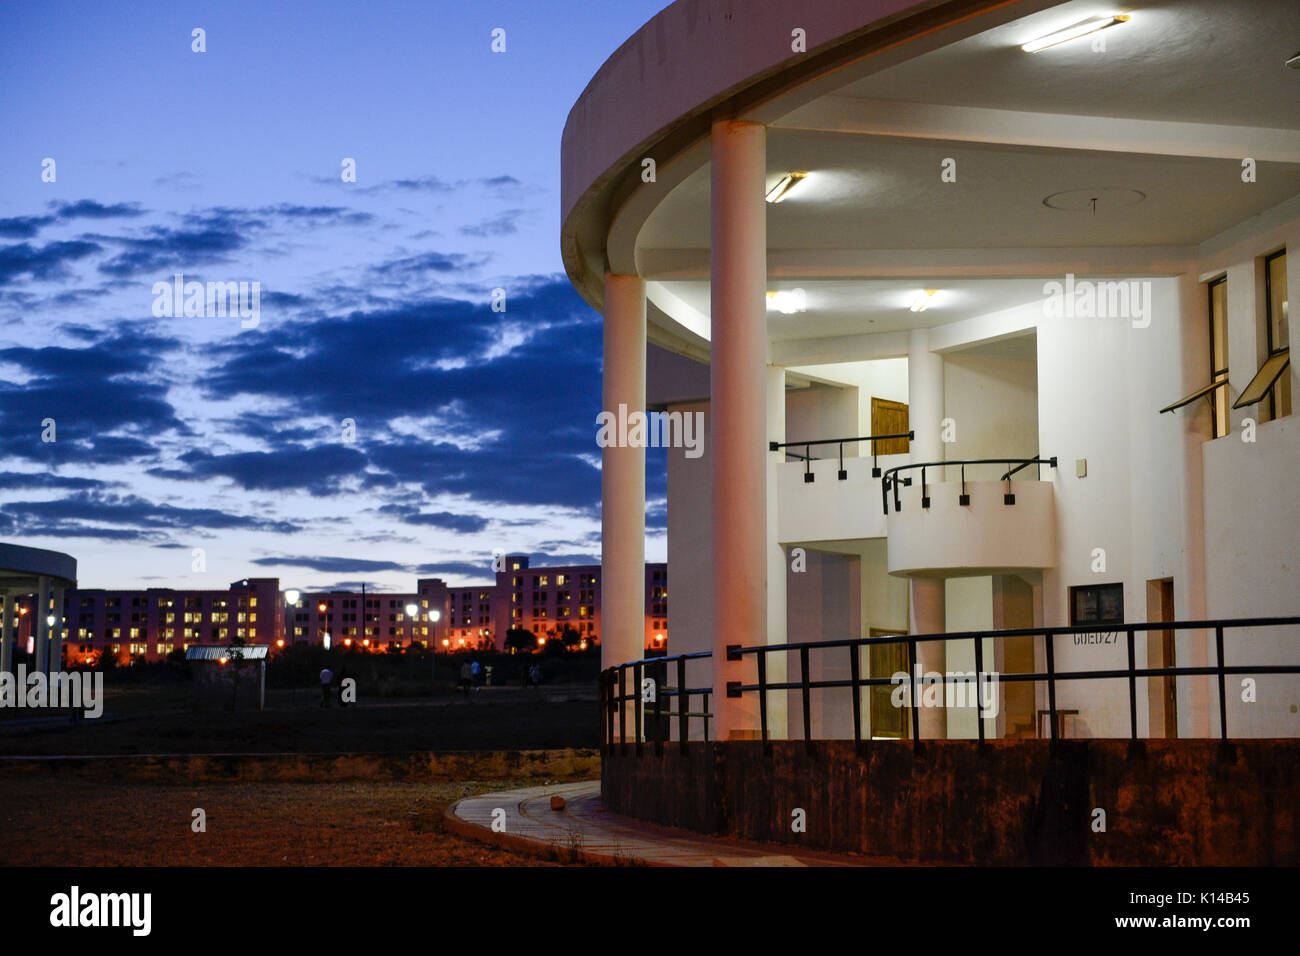 TANZANIA capital Dodoma, new public university  of Dodoma UDOM / TANSANIA Dodoma, Universitaet von Dodoma, die größte Universität in ganz Ostafrika mit ca. 40.000 Studenten Stock Photo